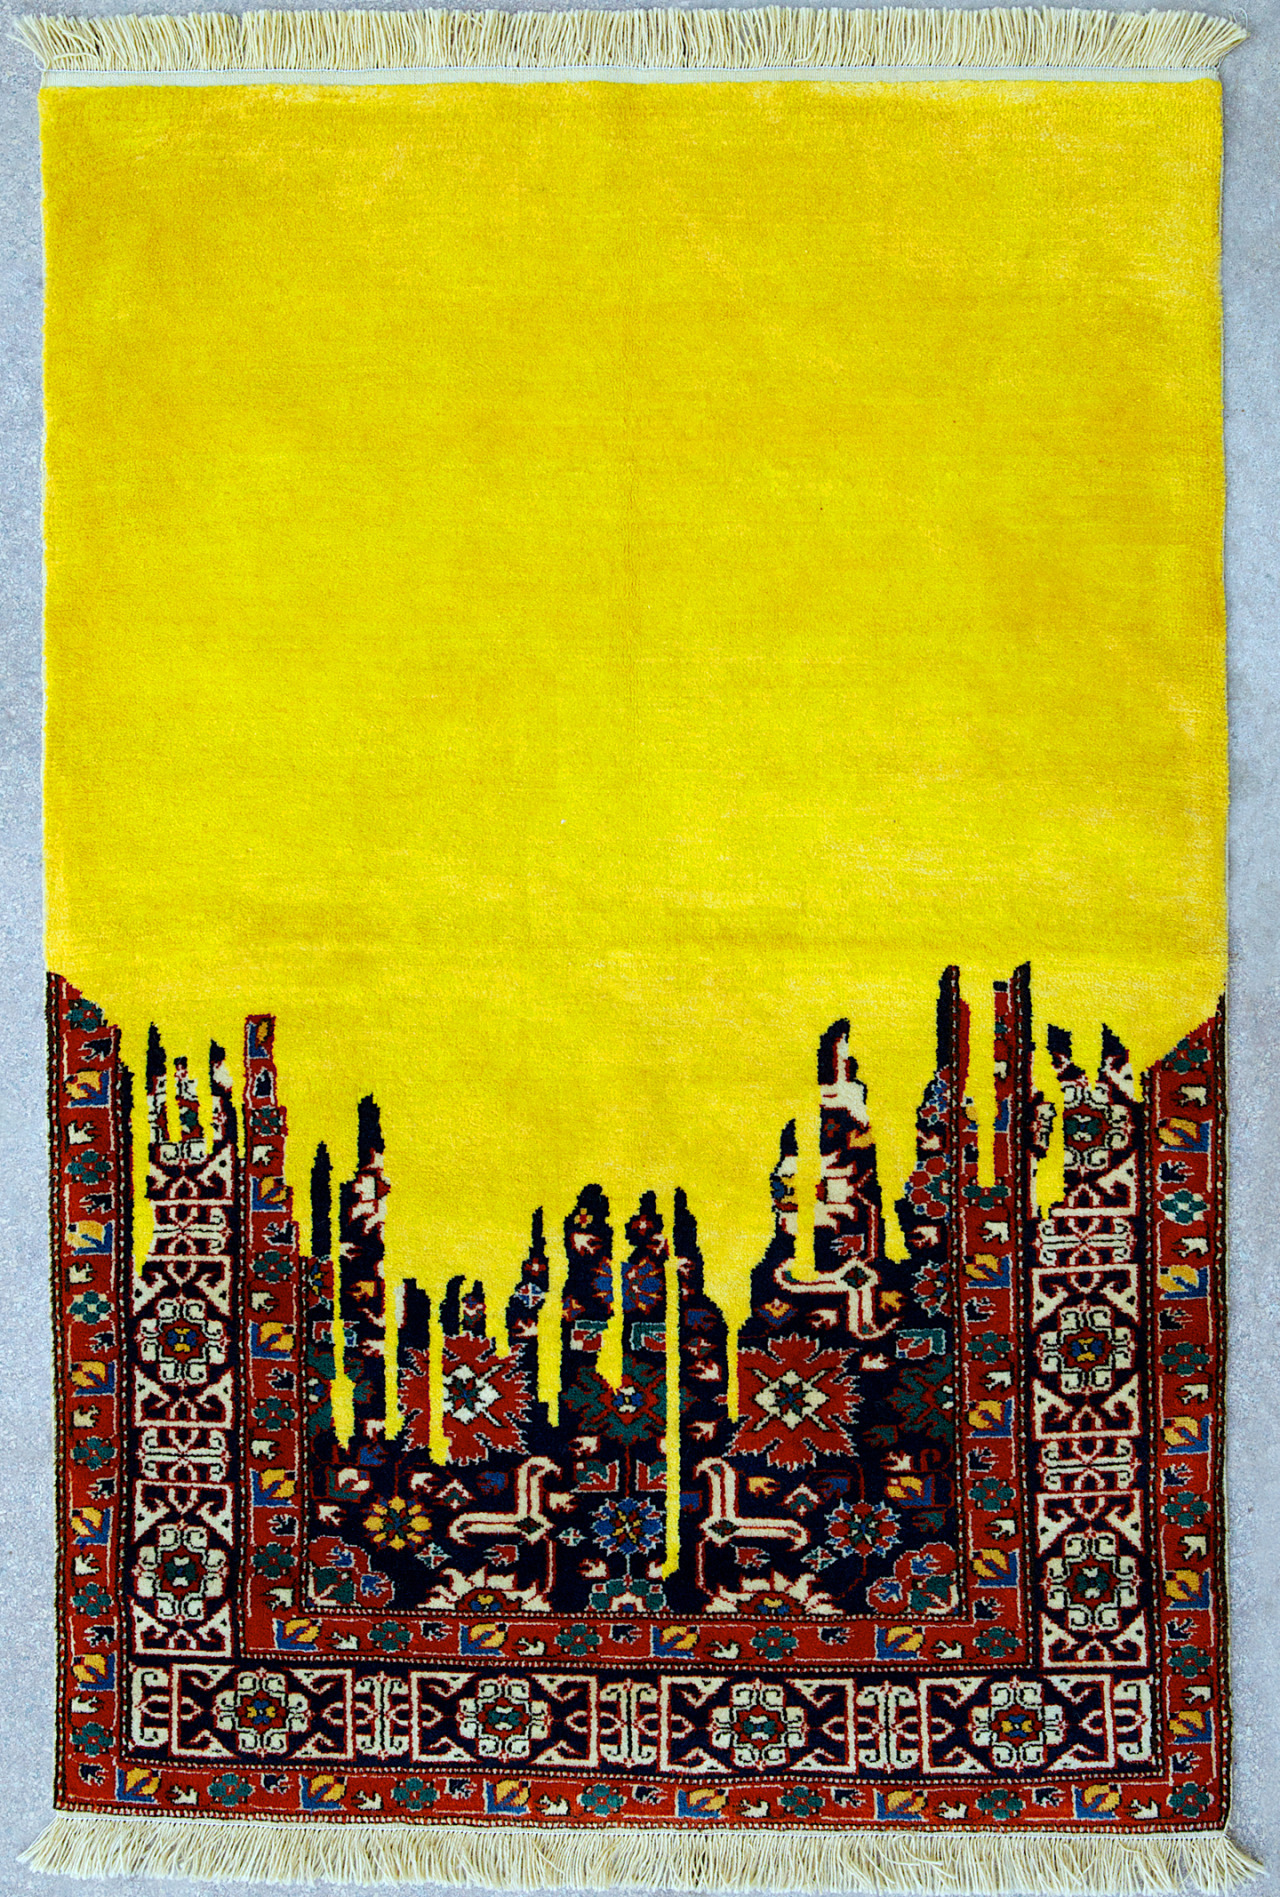 iheartmyart:  Faig Ahmed 2. Flood of Yellow Weigh, 150 X 100 sm, Woolen handmade